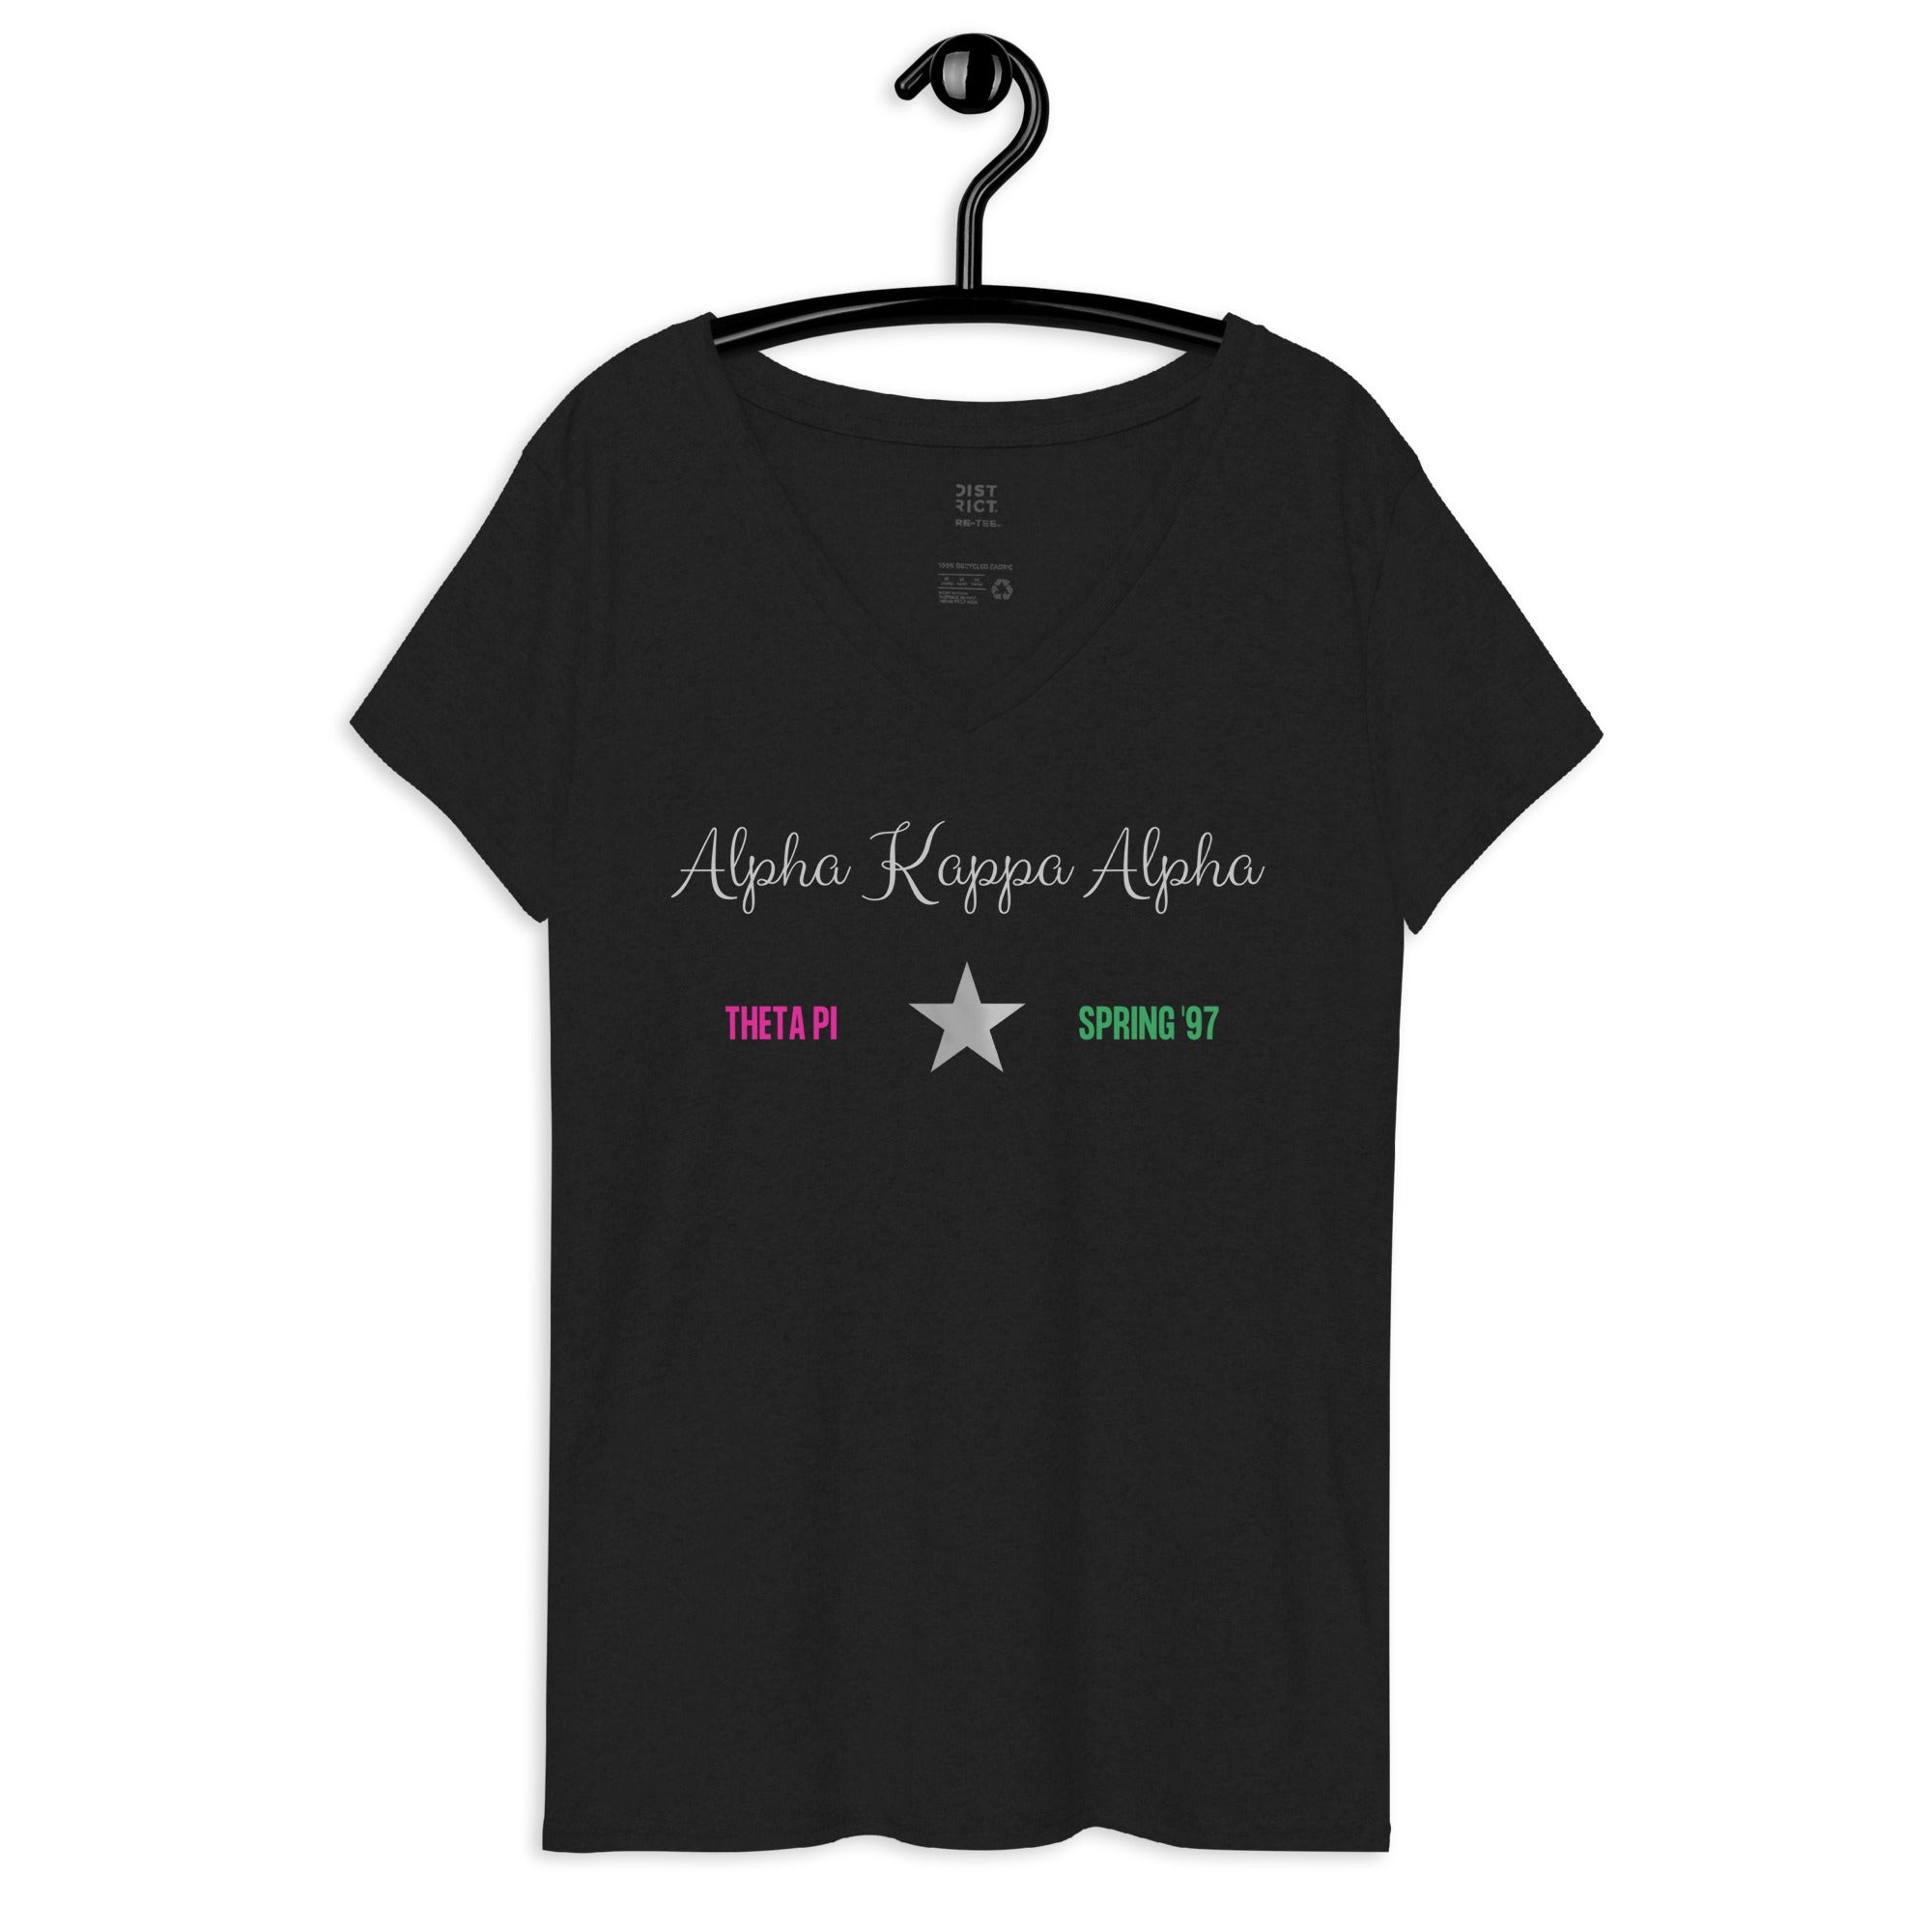 Alpha Kappa Alpha Theta Pi 2 Women’s recycled v-neck t-shirt